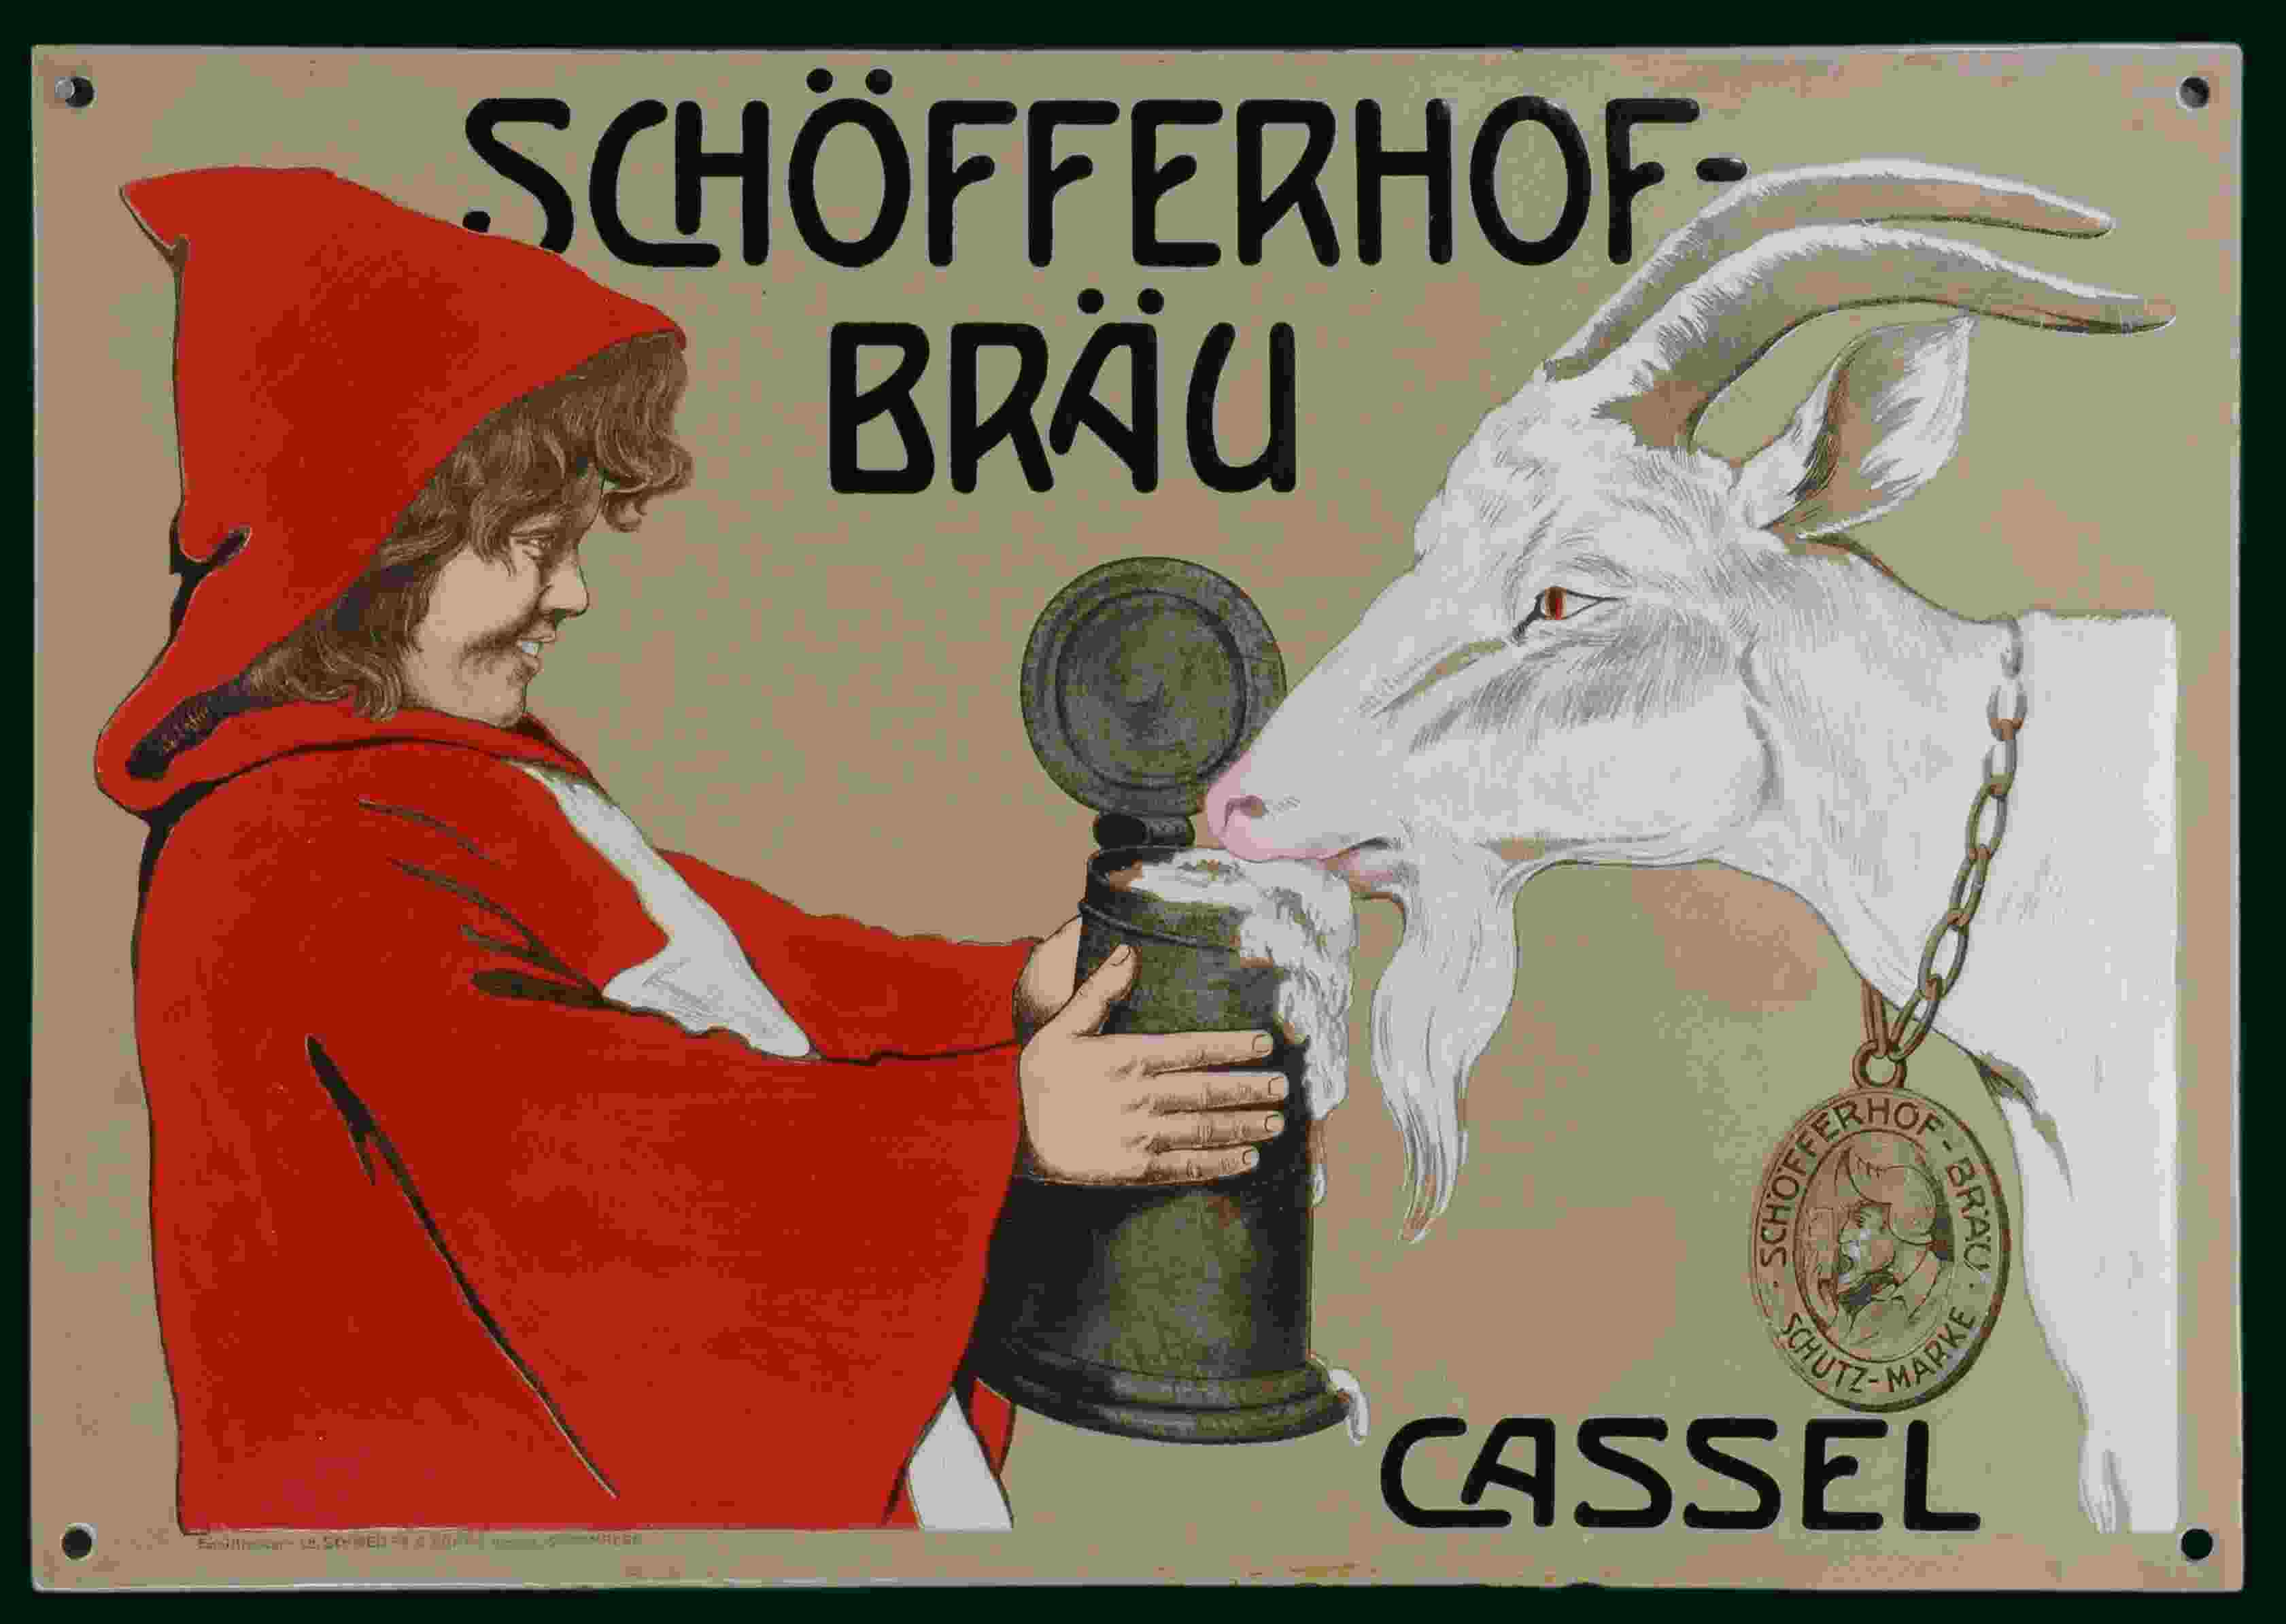 Schöfferhof-Bräu Cassel 